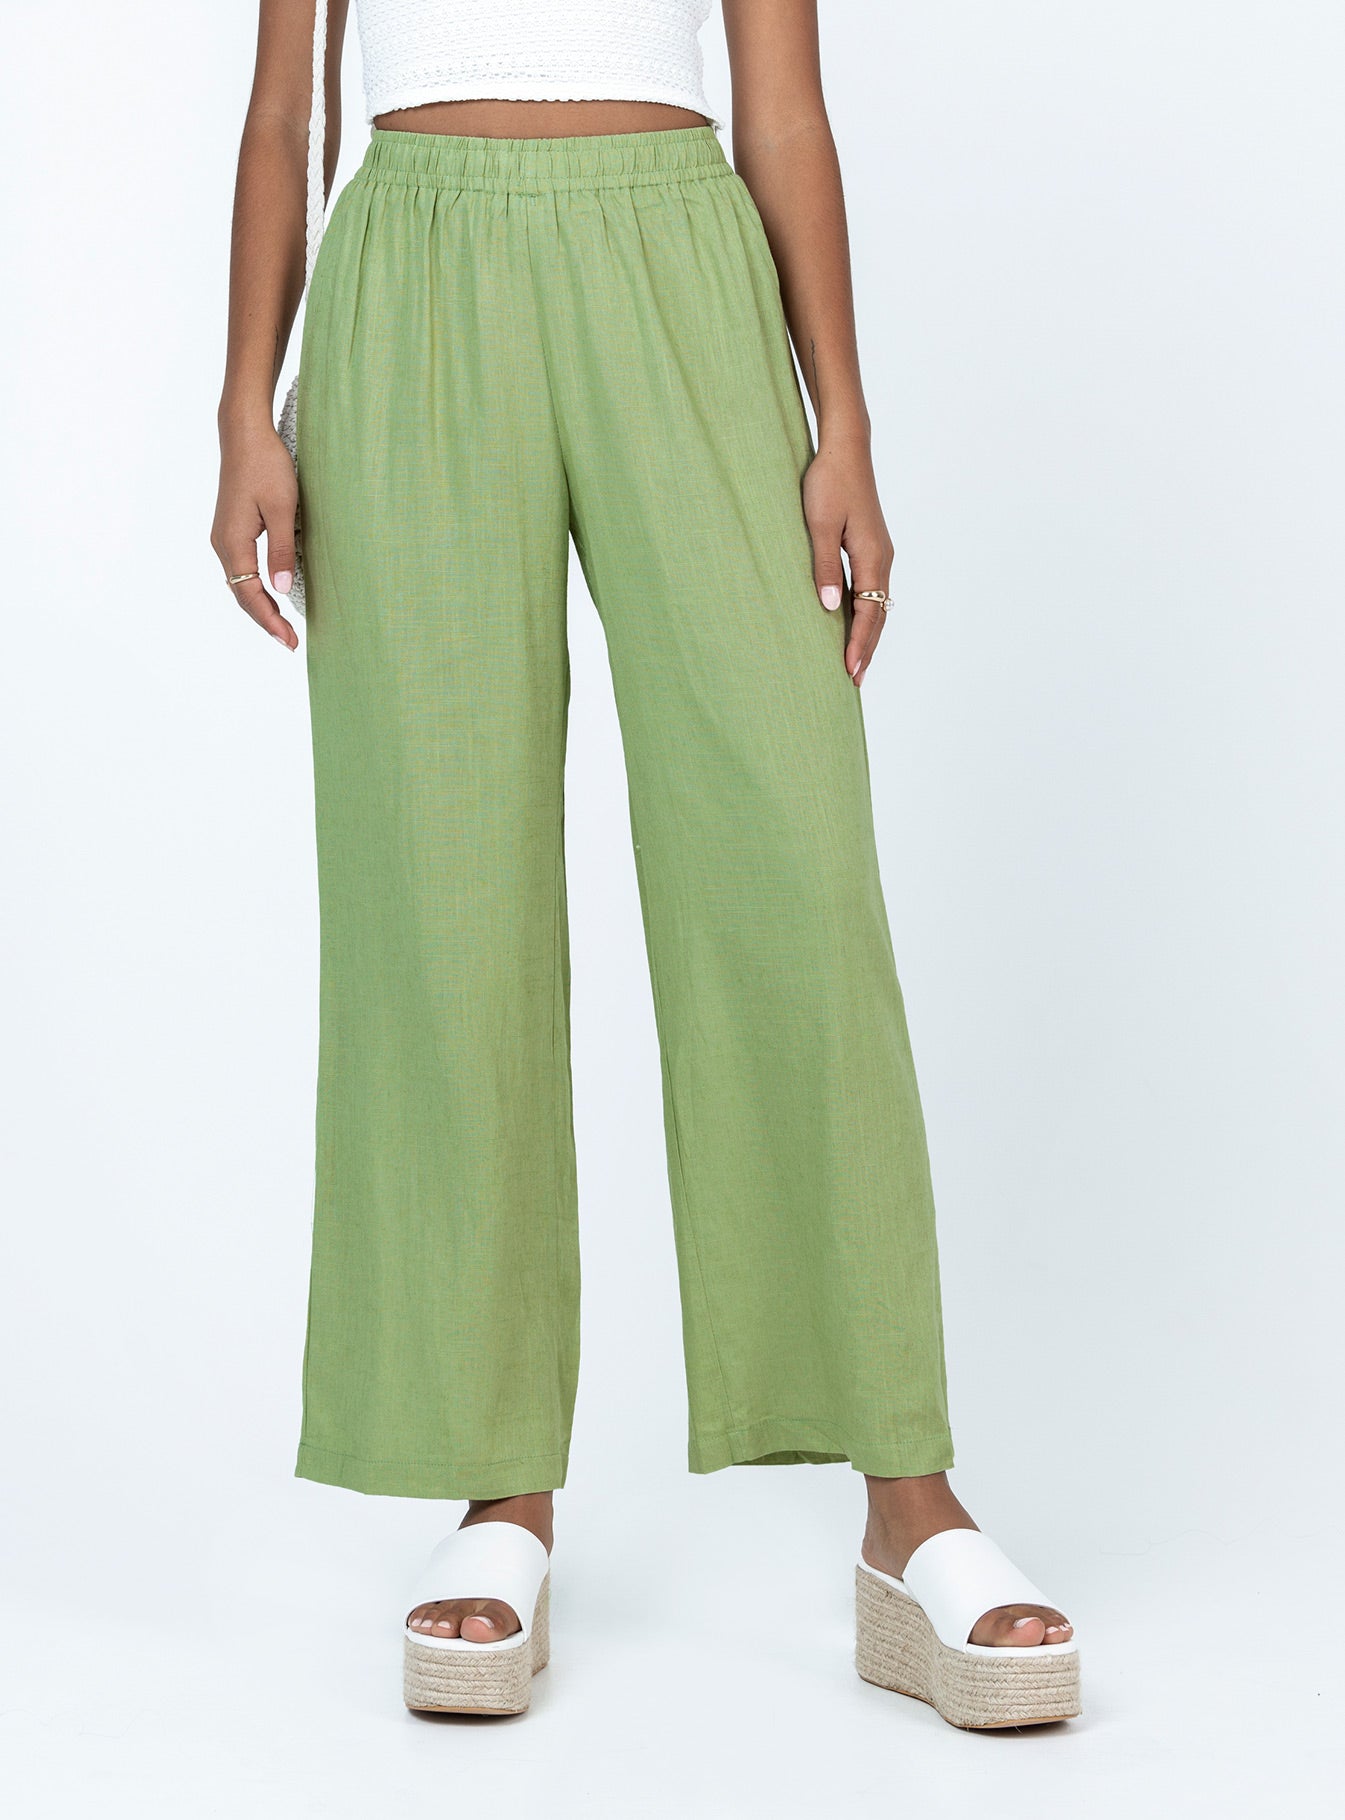 Dusty Green Wide Leg Linen Pants by Zenana Sizes S-3X | Lovish Boutique